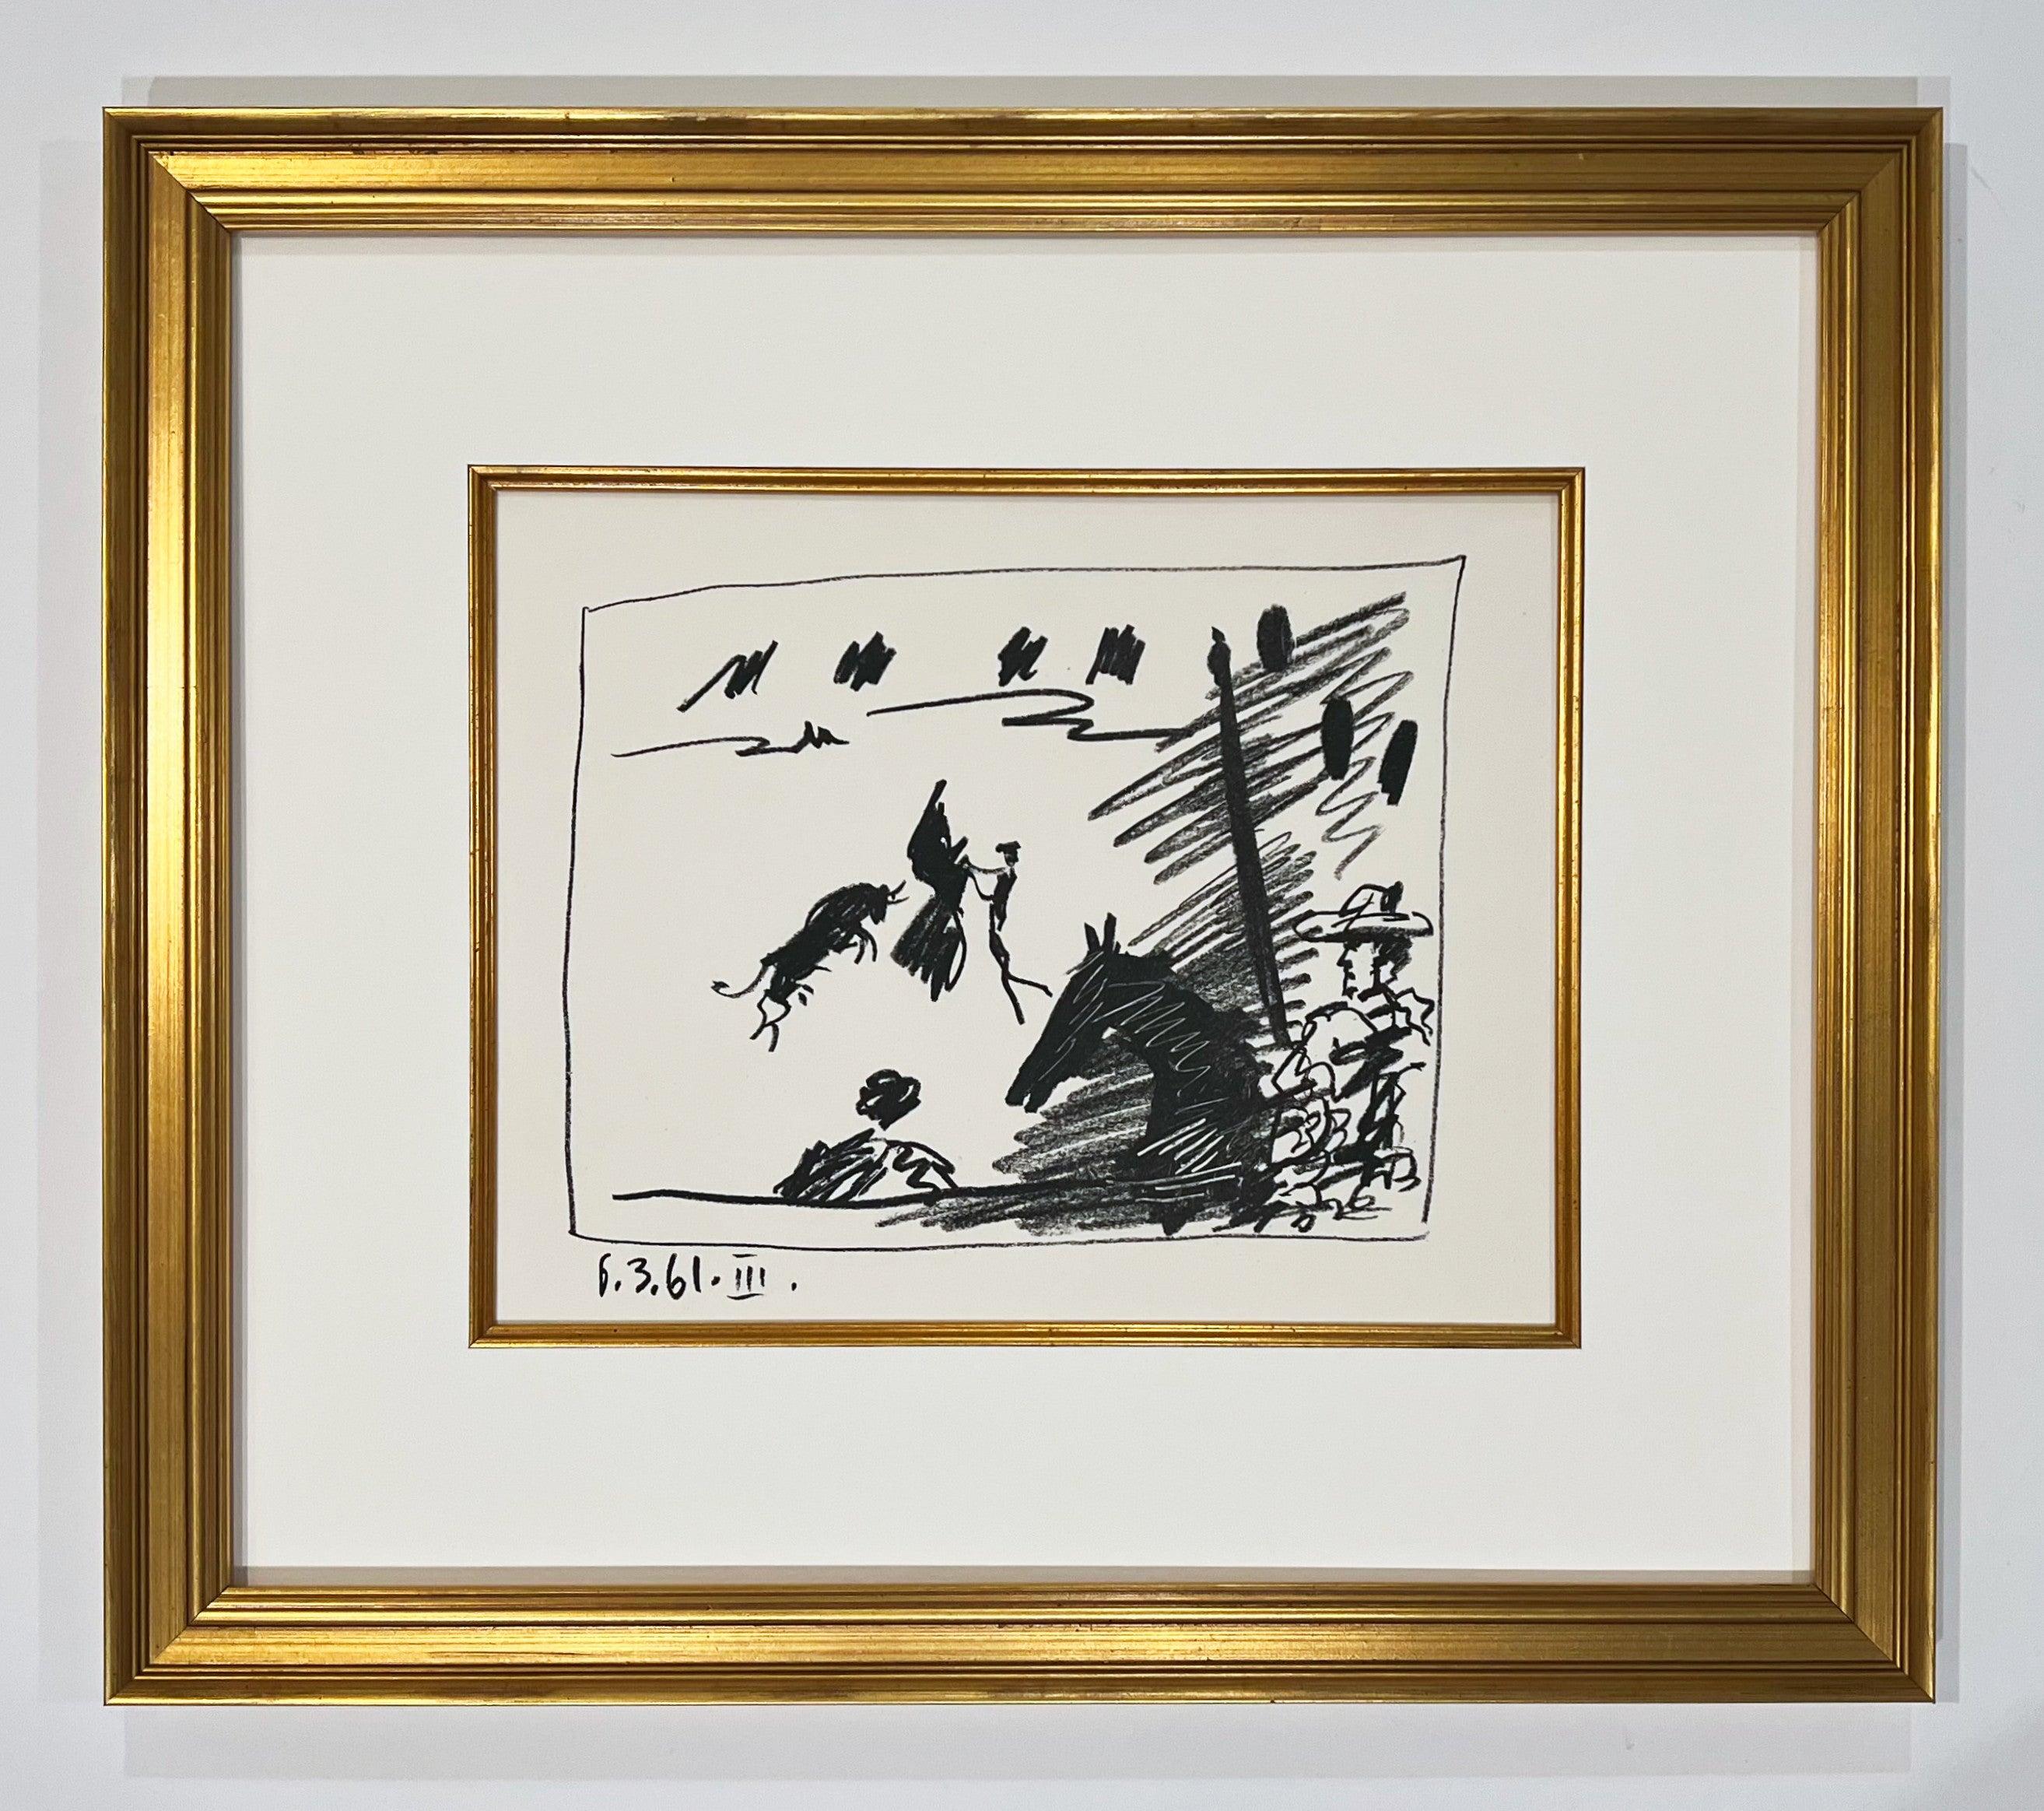 Jeu de la Cape (III) – Print von Pablo Picasso